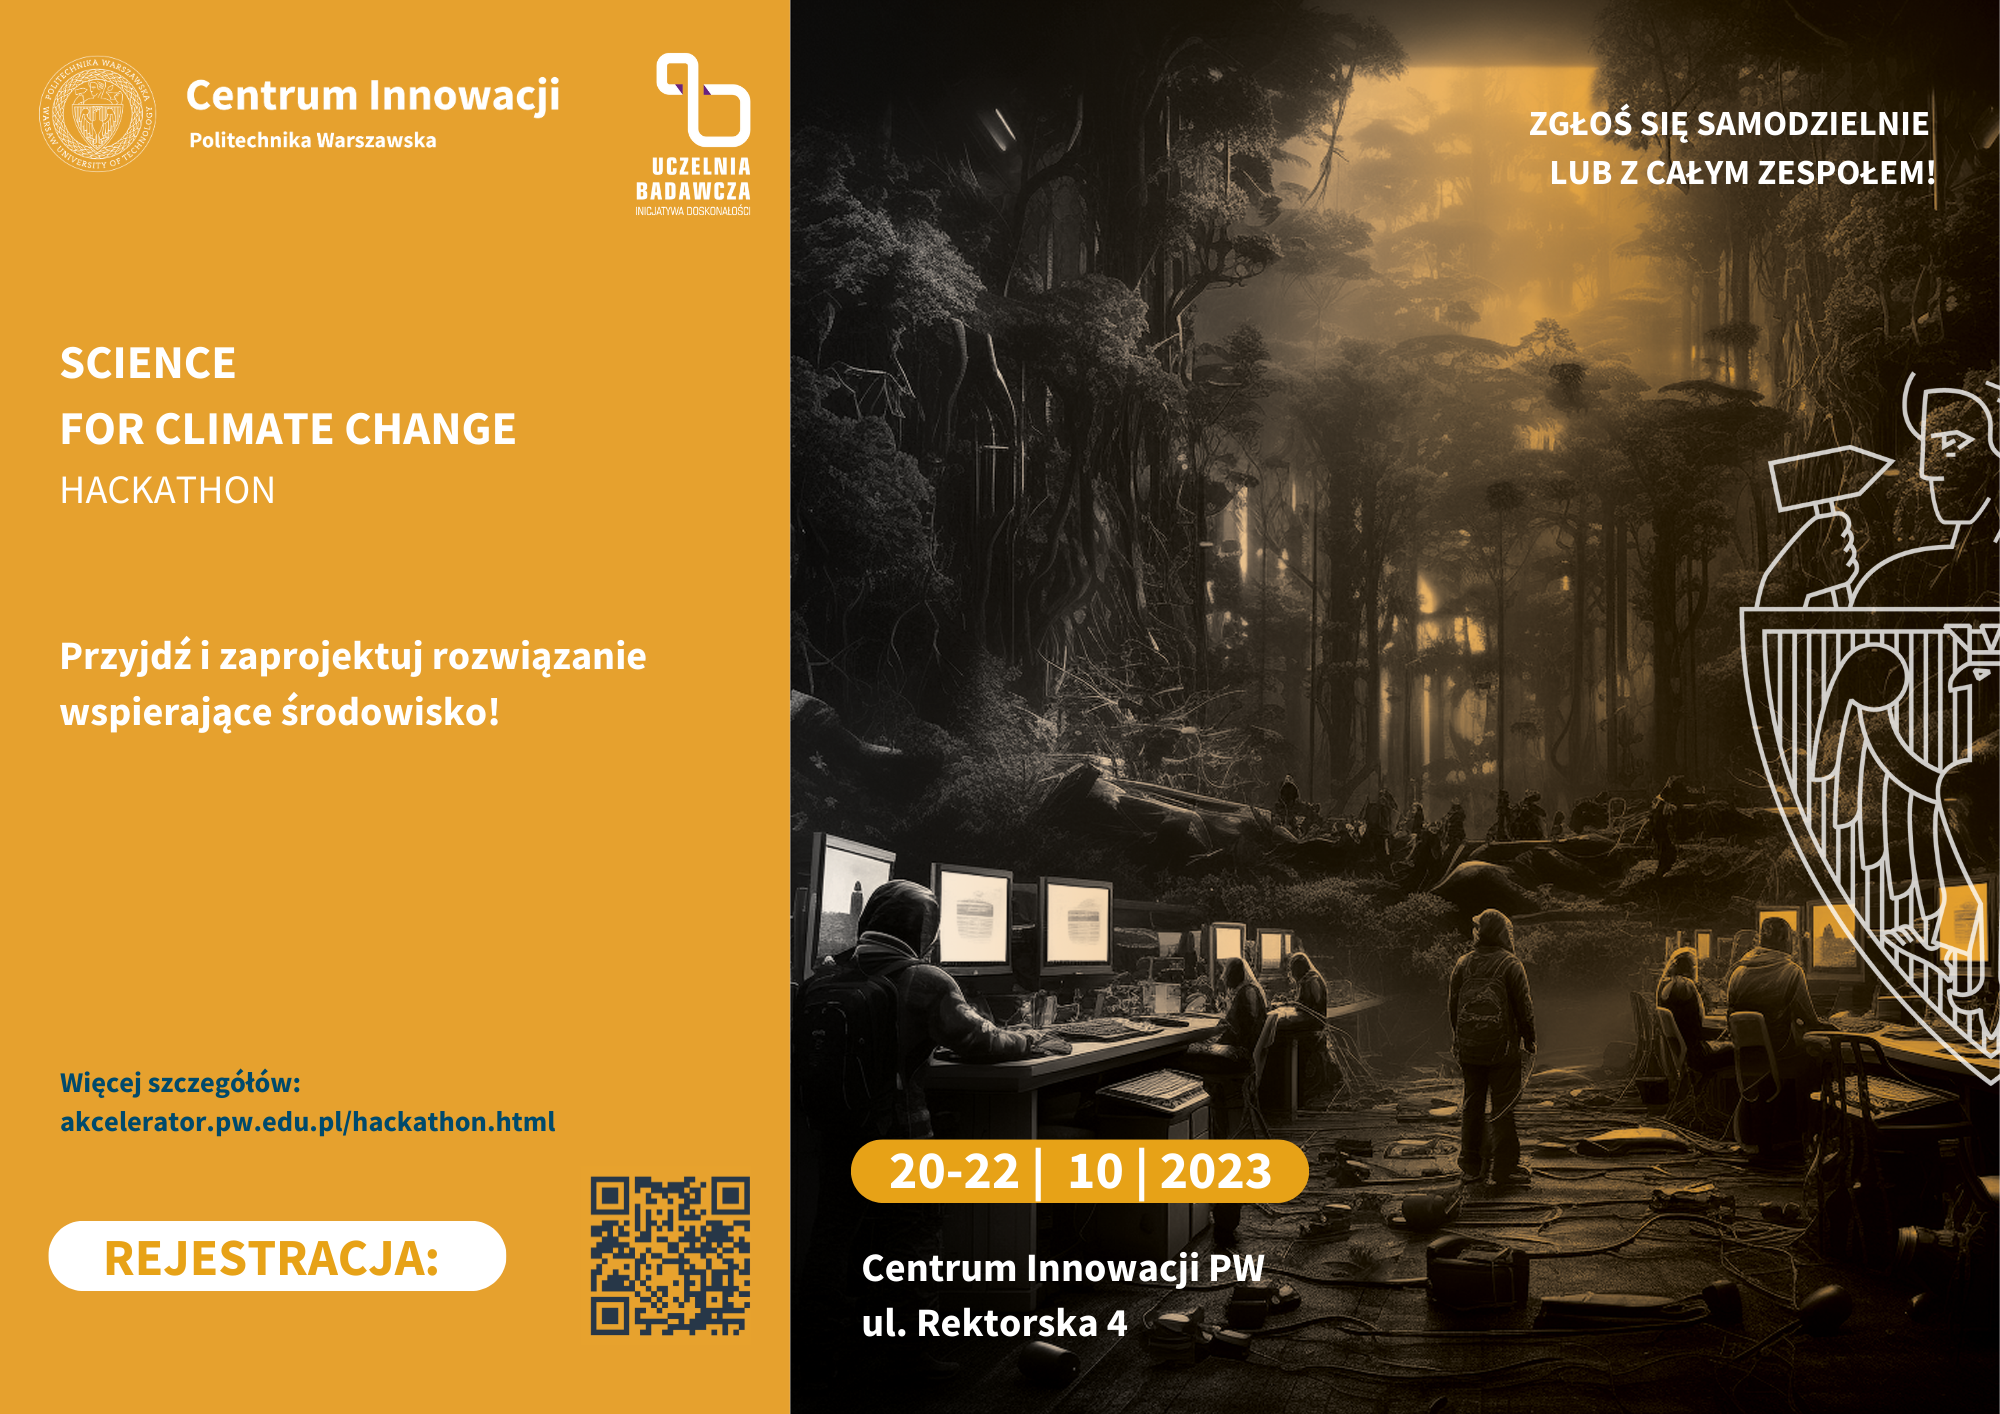 HACKATHON "SCIENCE FOR CLIMATE CHANGE" - deadline 18.10.2023 r. 